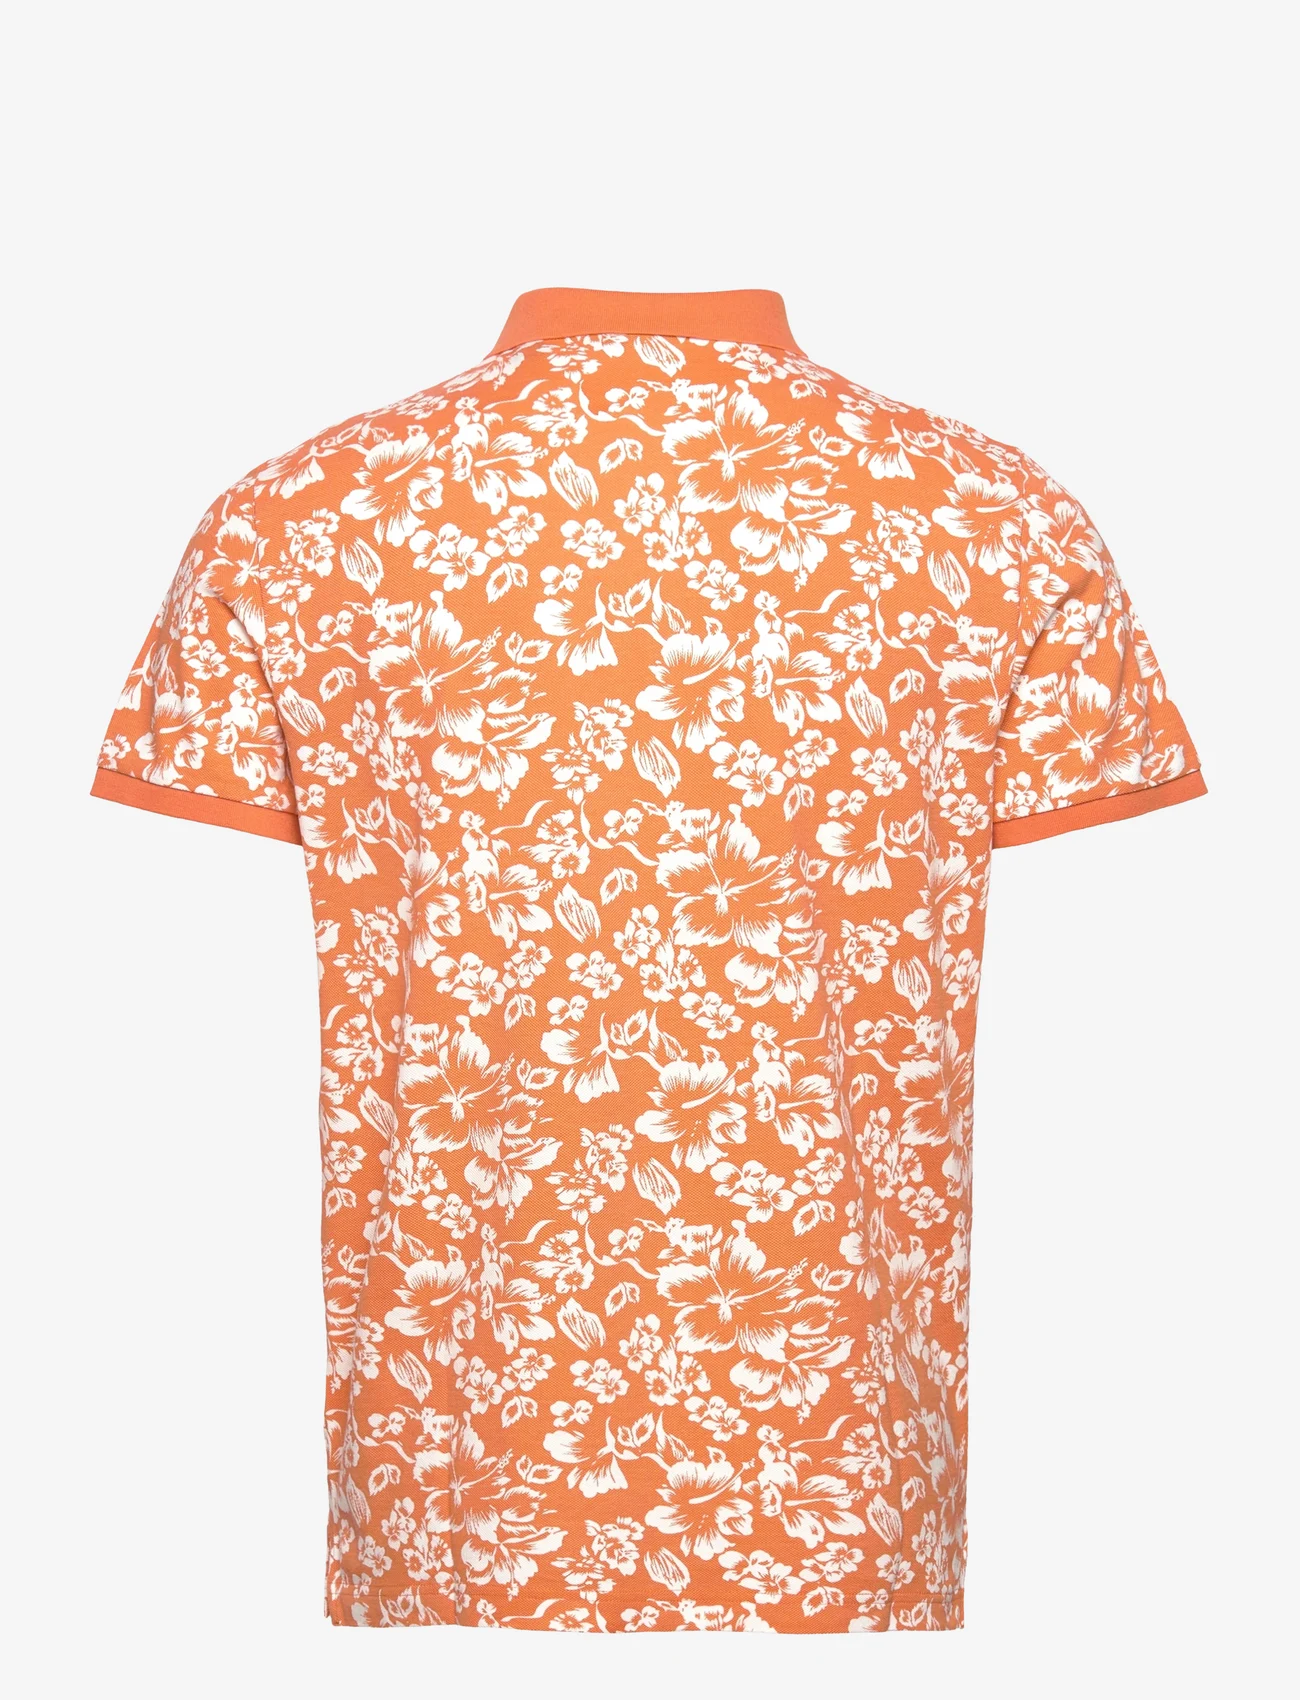 GANT - FLORAL PRINT SS PIQUE - polo marškinėliai trumpomis rankovėmis - apricot orange - 1